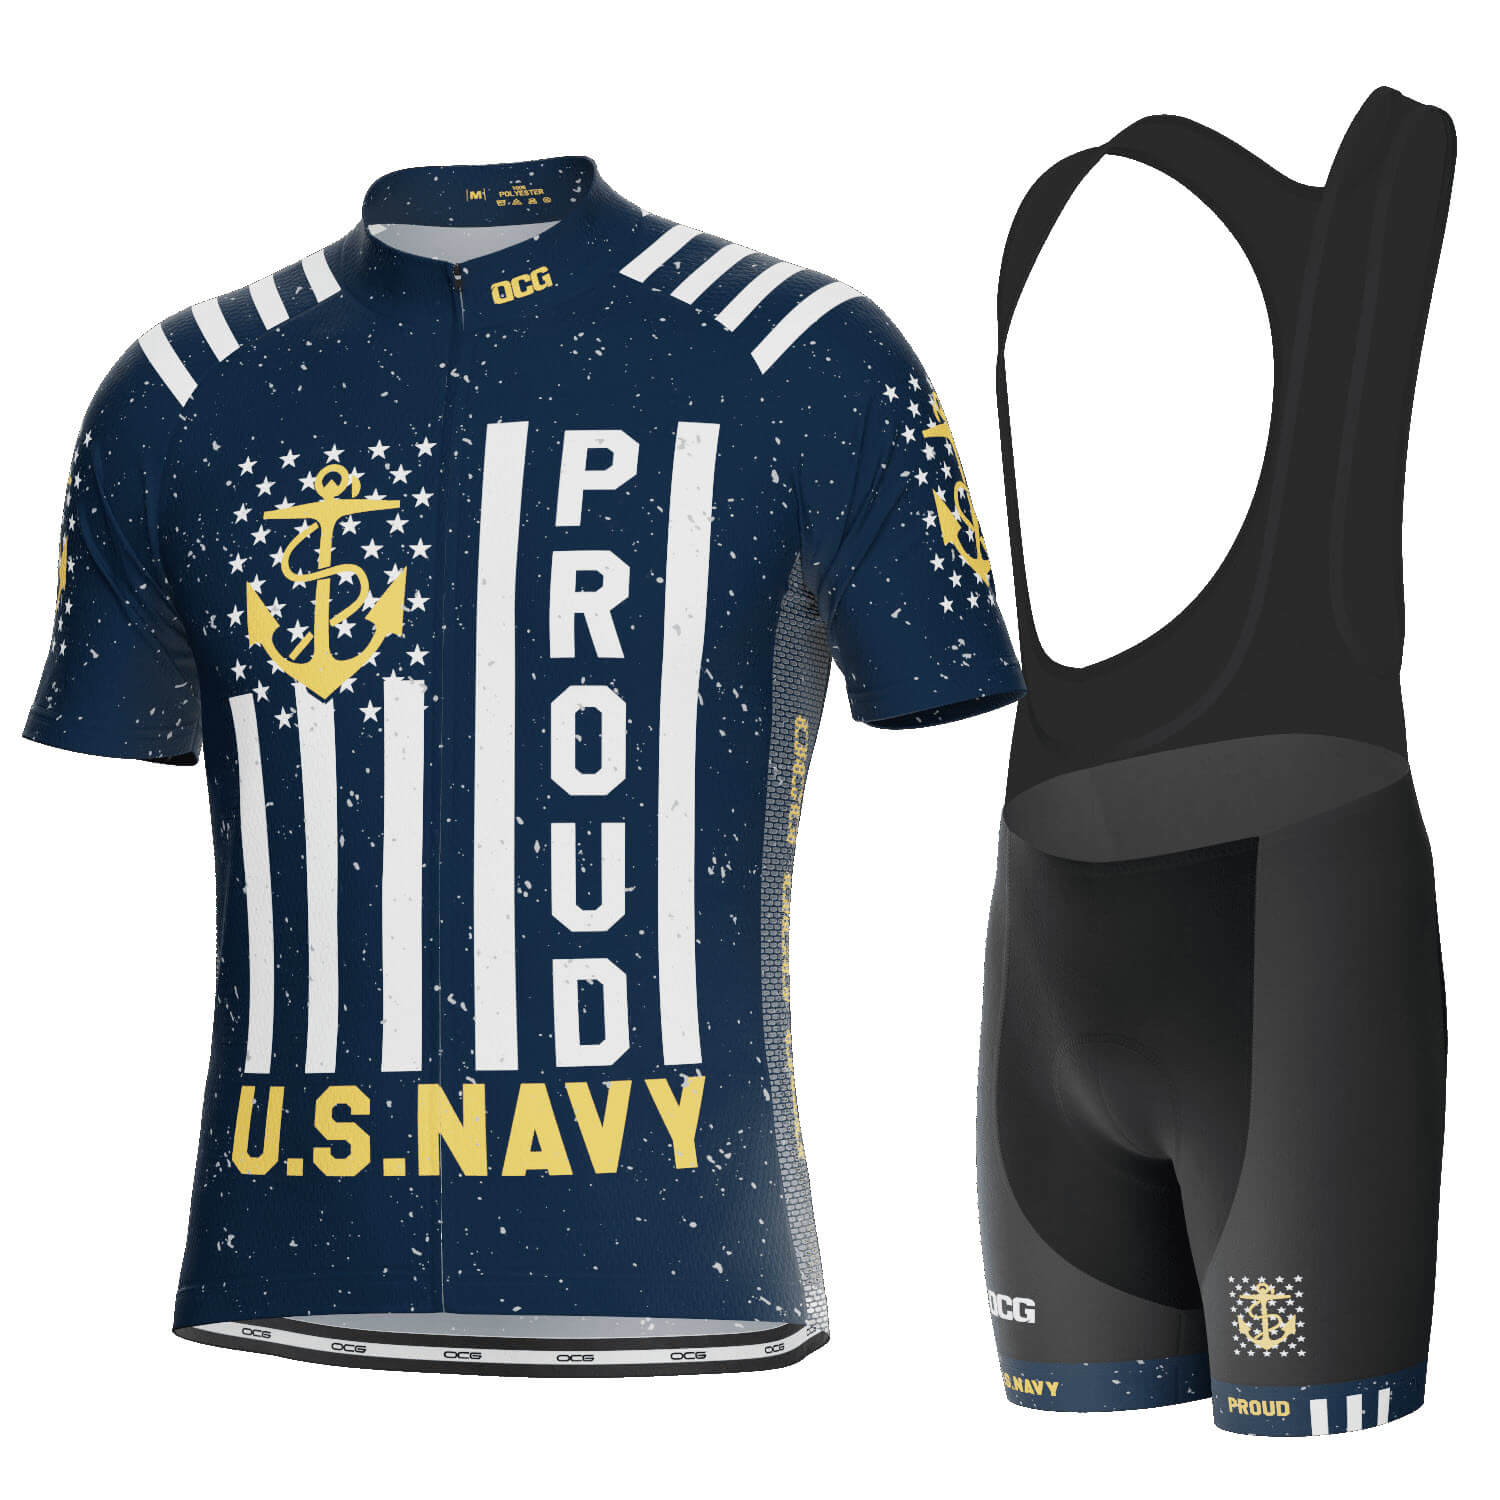 Men's USAF Navy Proud 2 Piece Cycling Kit